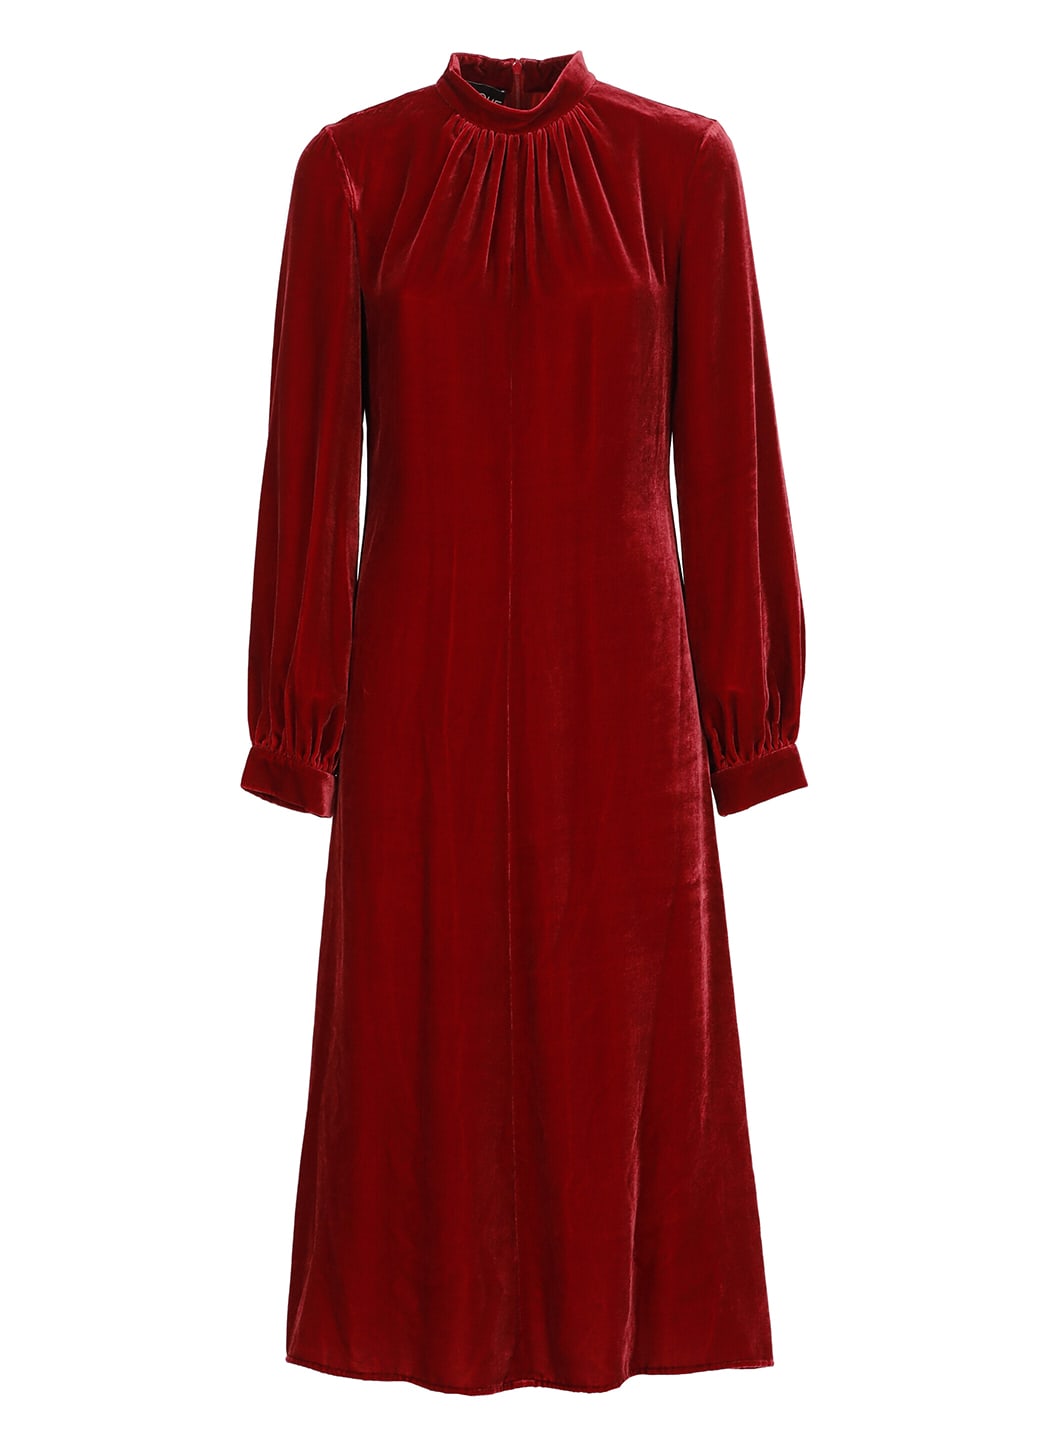 Boutique Moschino Velvet Dress